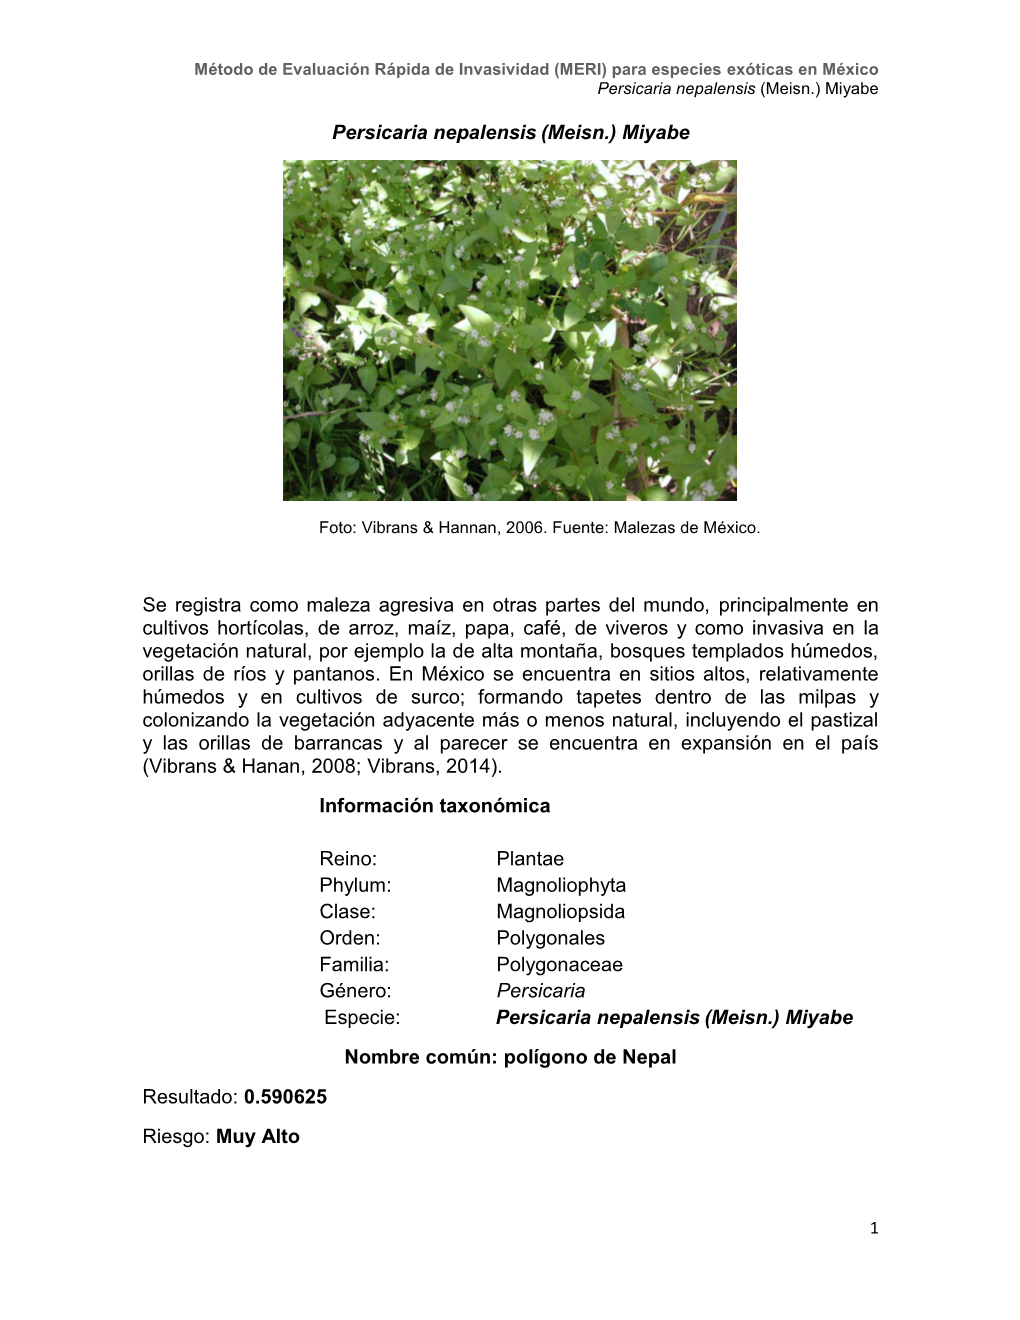 Persicaria Nepalensis (Meisn.) Miyabe Se Registra Como Maleza Agresiva